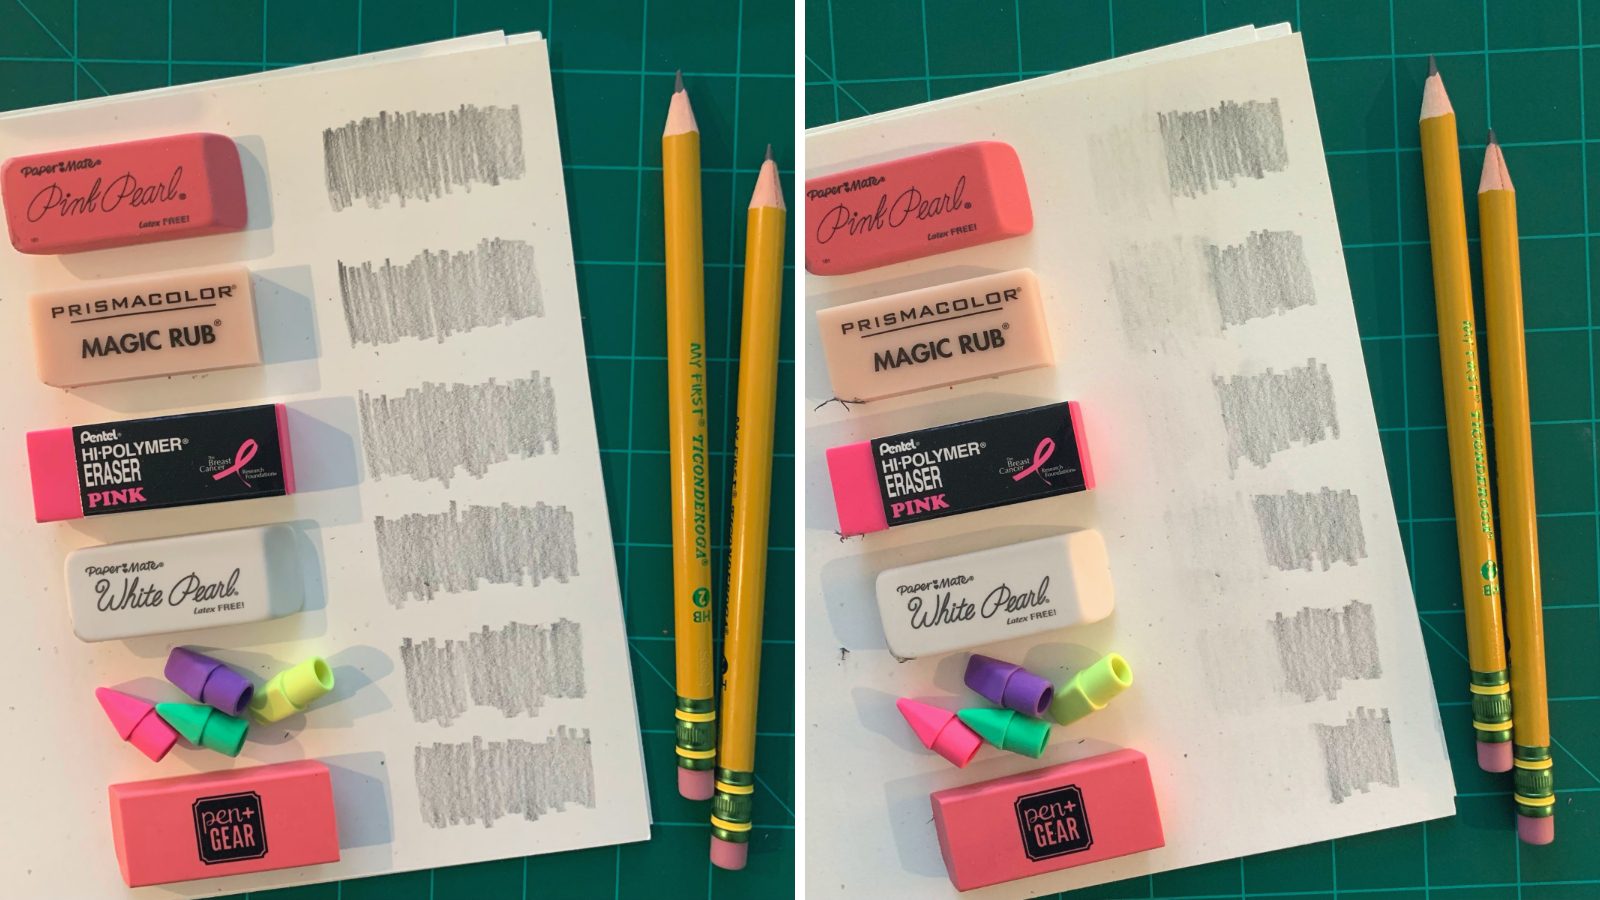 4 Prismacolor Magic Rub Erasers Vinyl Art Drafting Non Abrasive